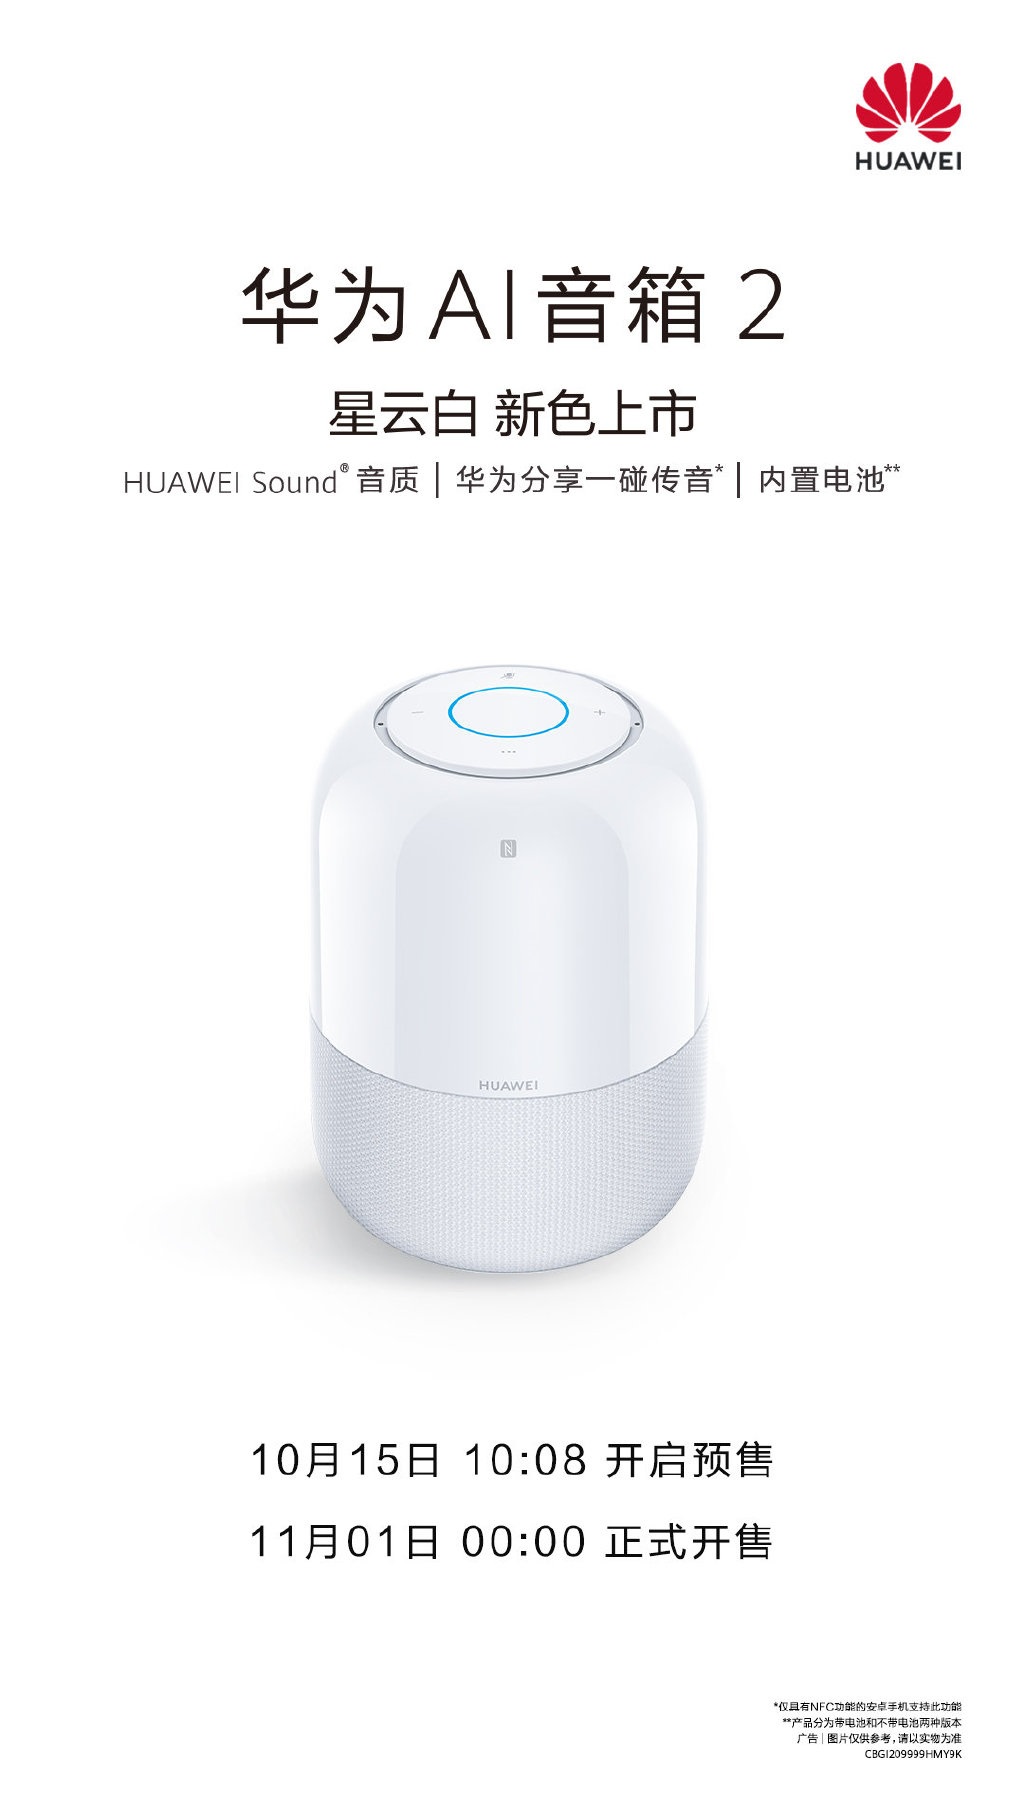 Huawei AI Speaker 2 Image